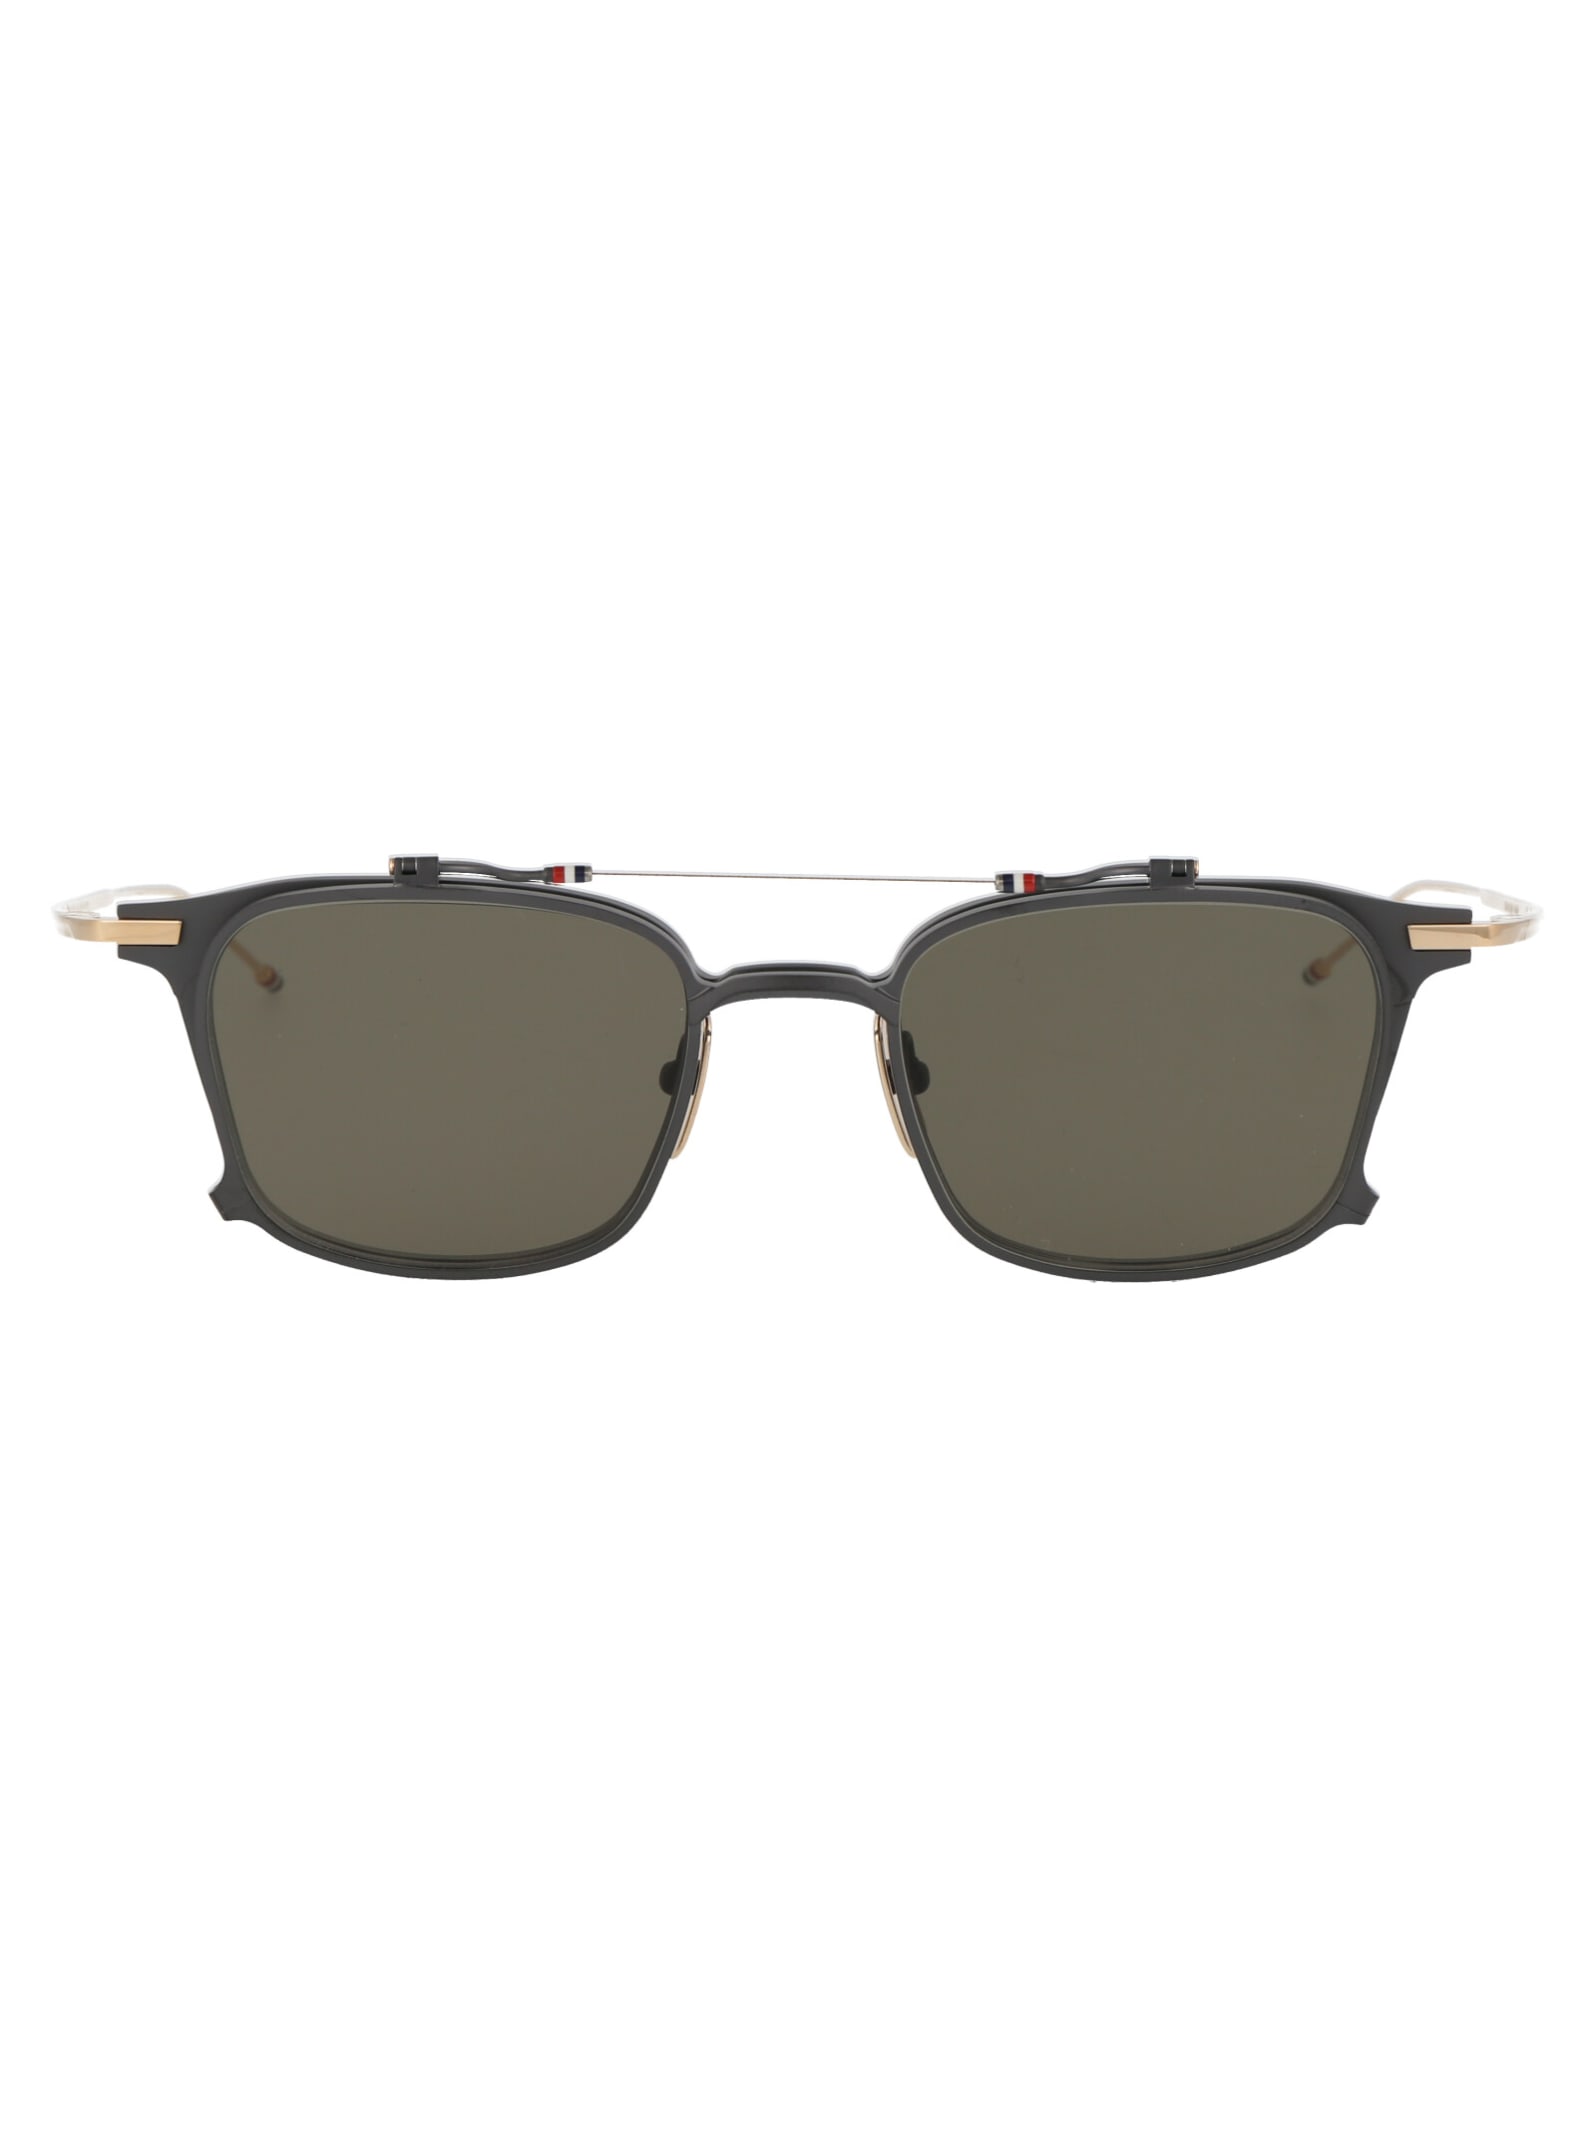 Thom Browne Tb-817 Sunglasses